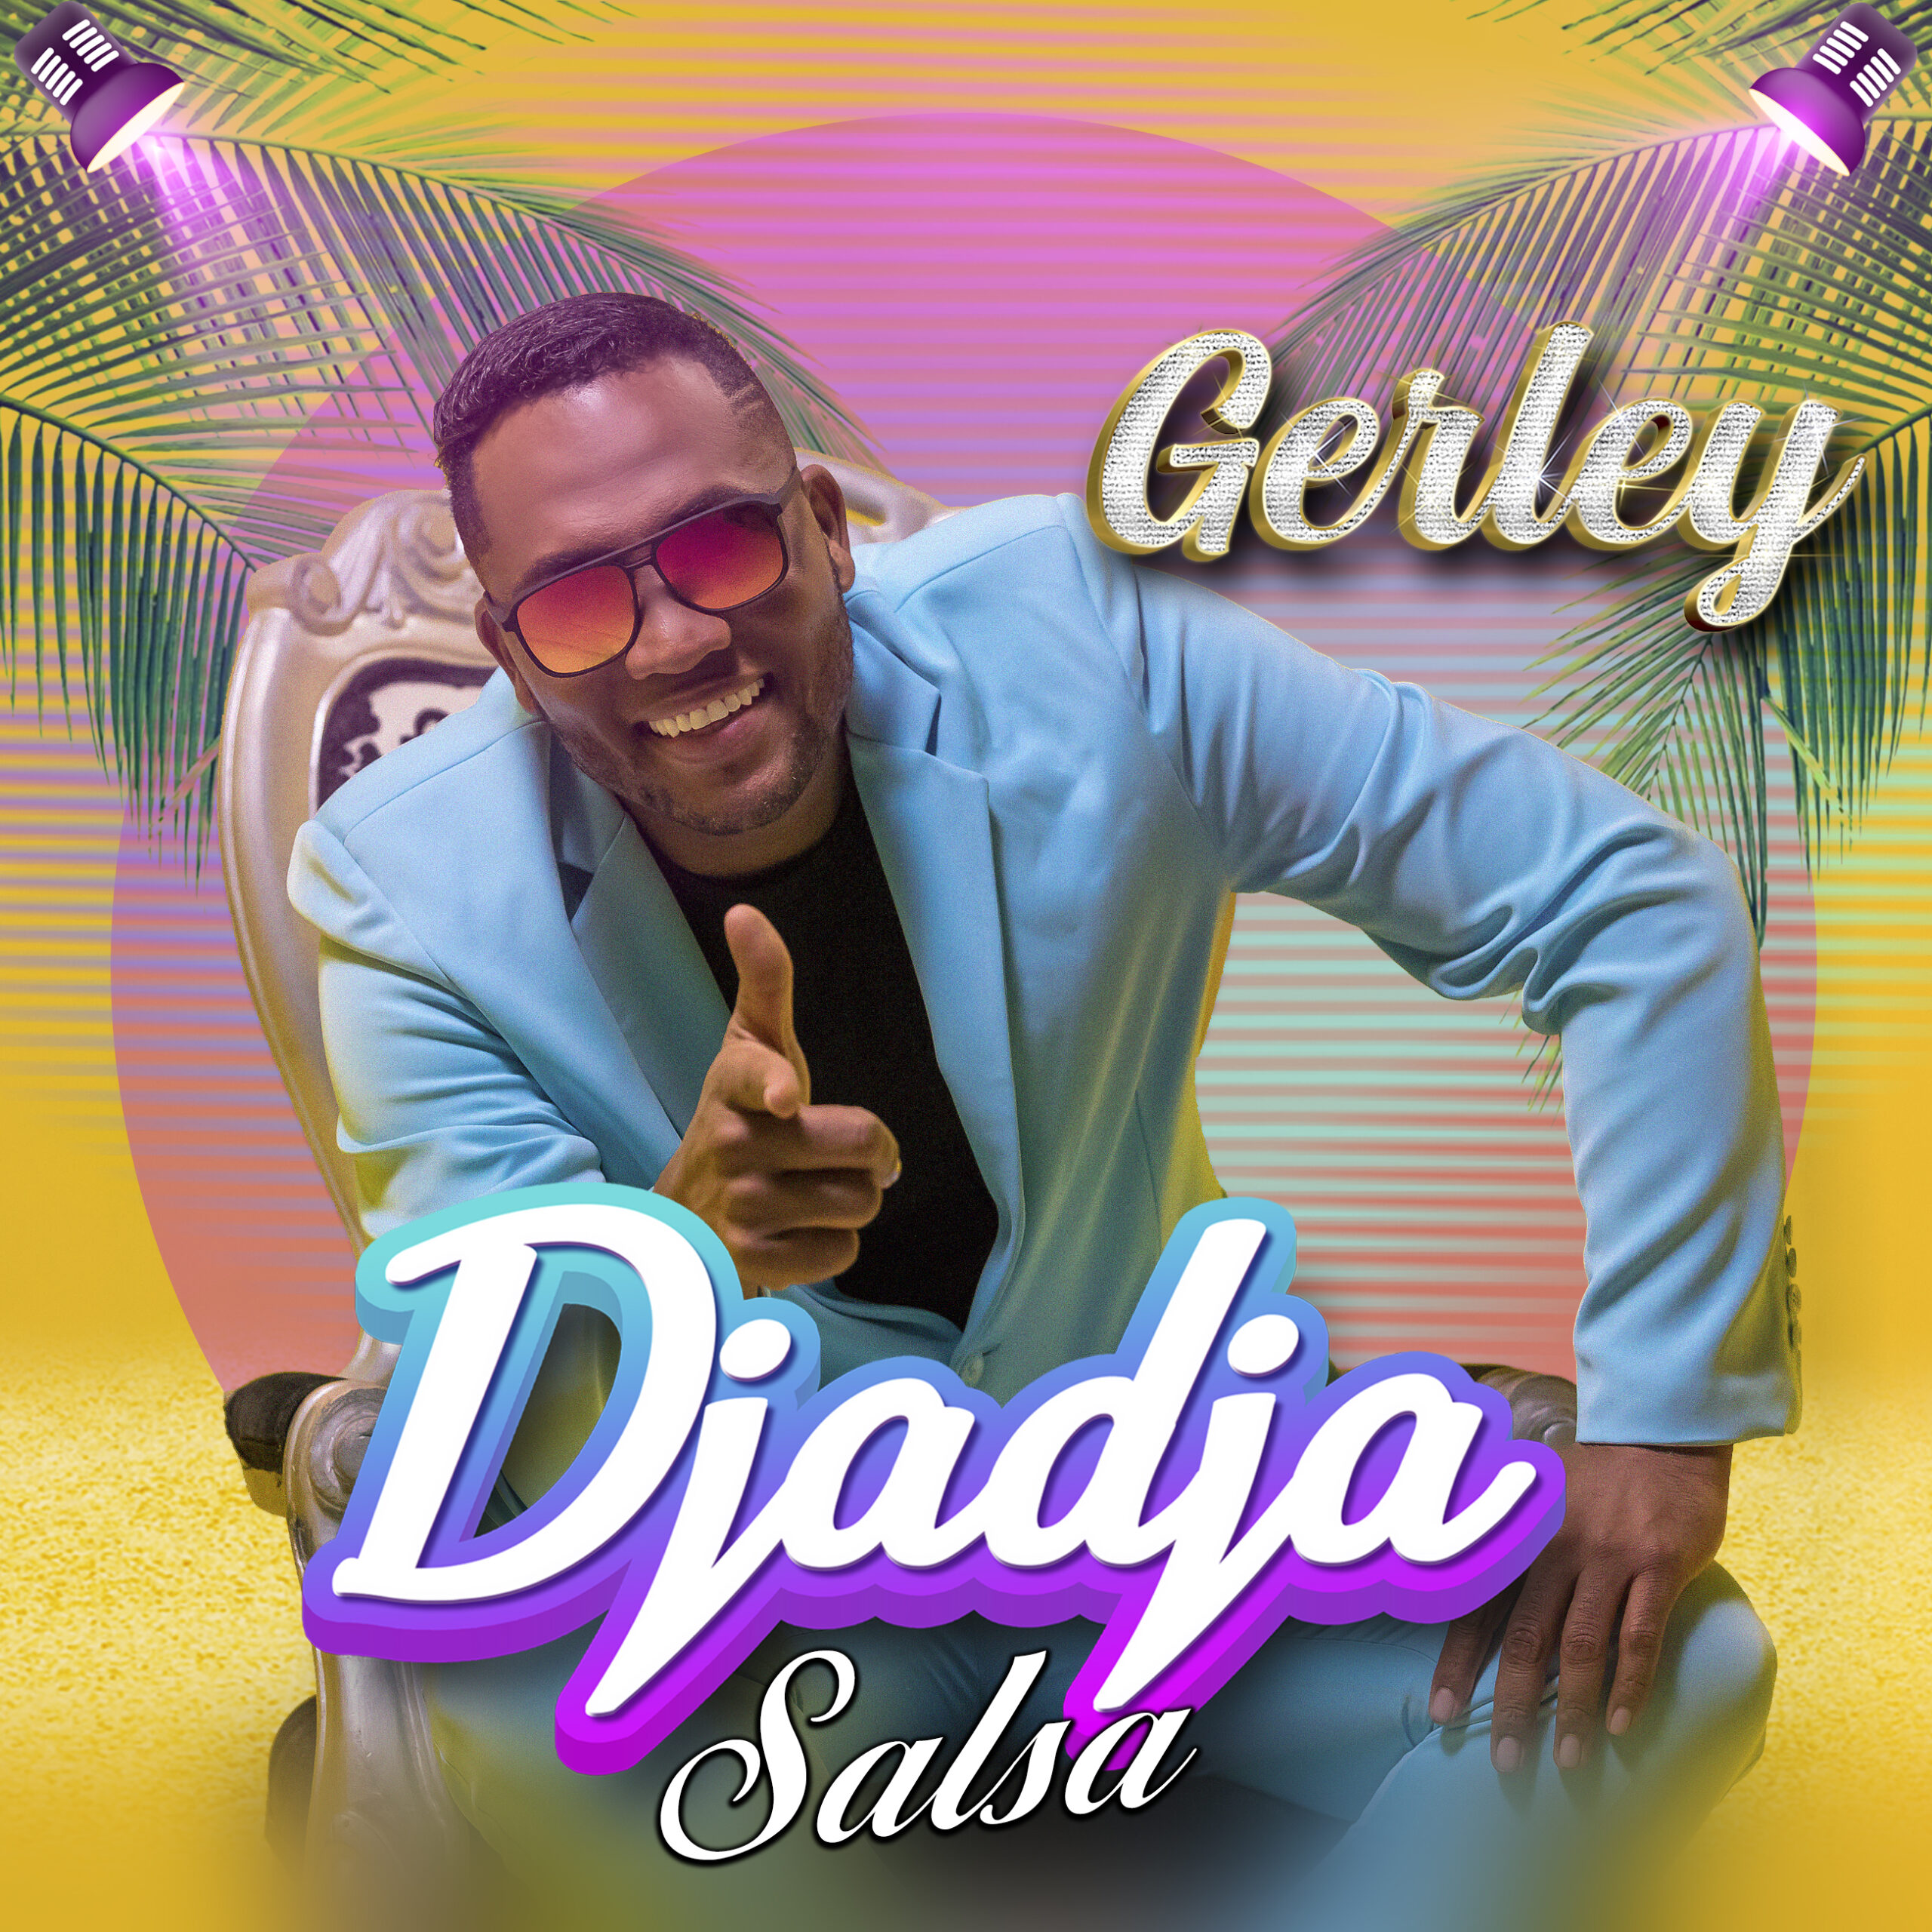 Gerley Salsa Presenta “DJADJA “